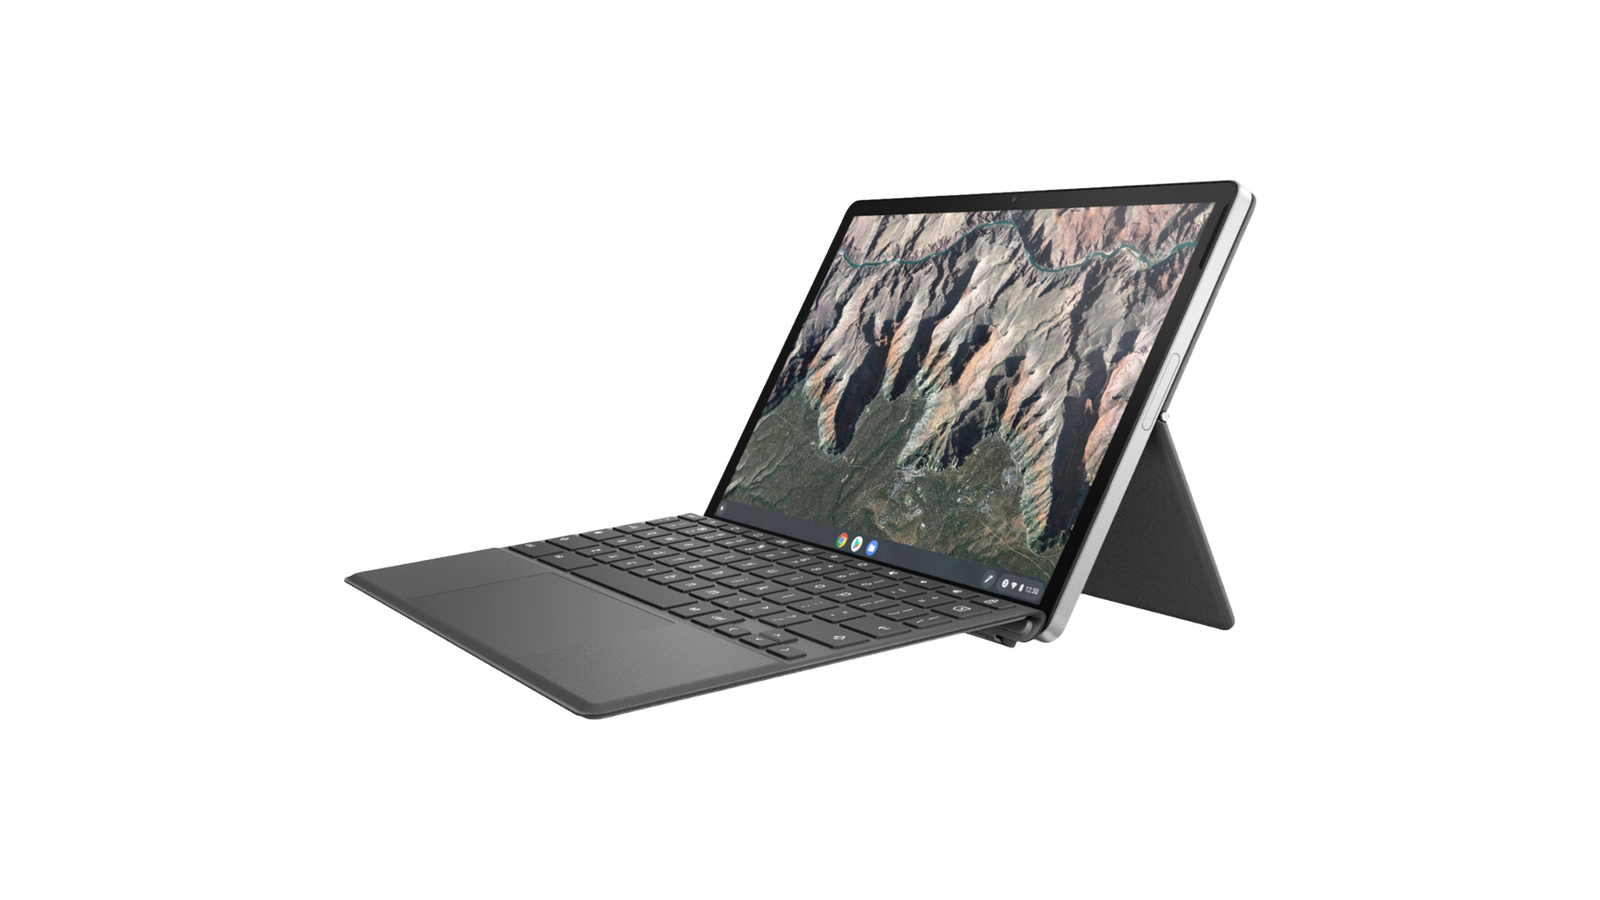 HP Chromebook x2 11 - The best HP Chromebook